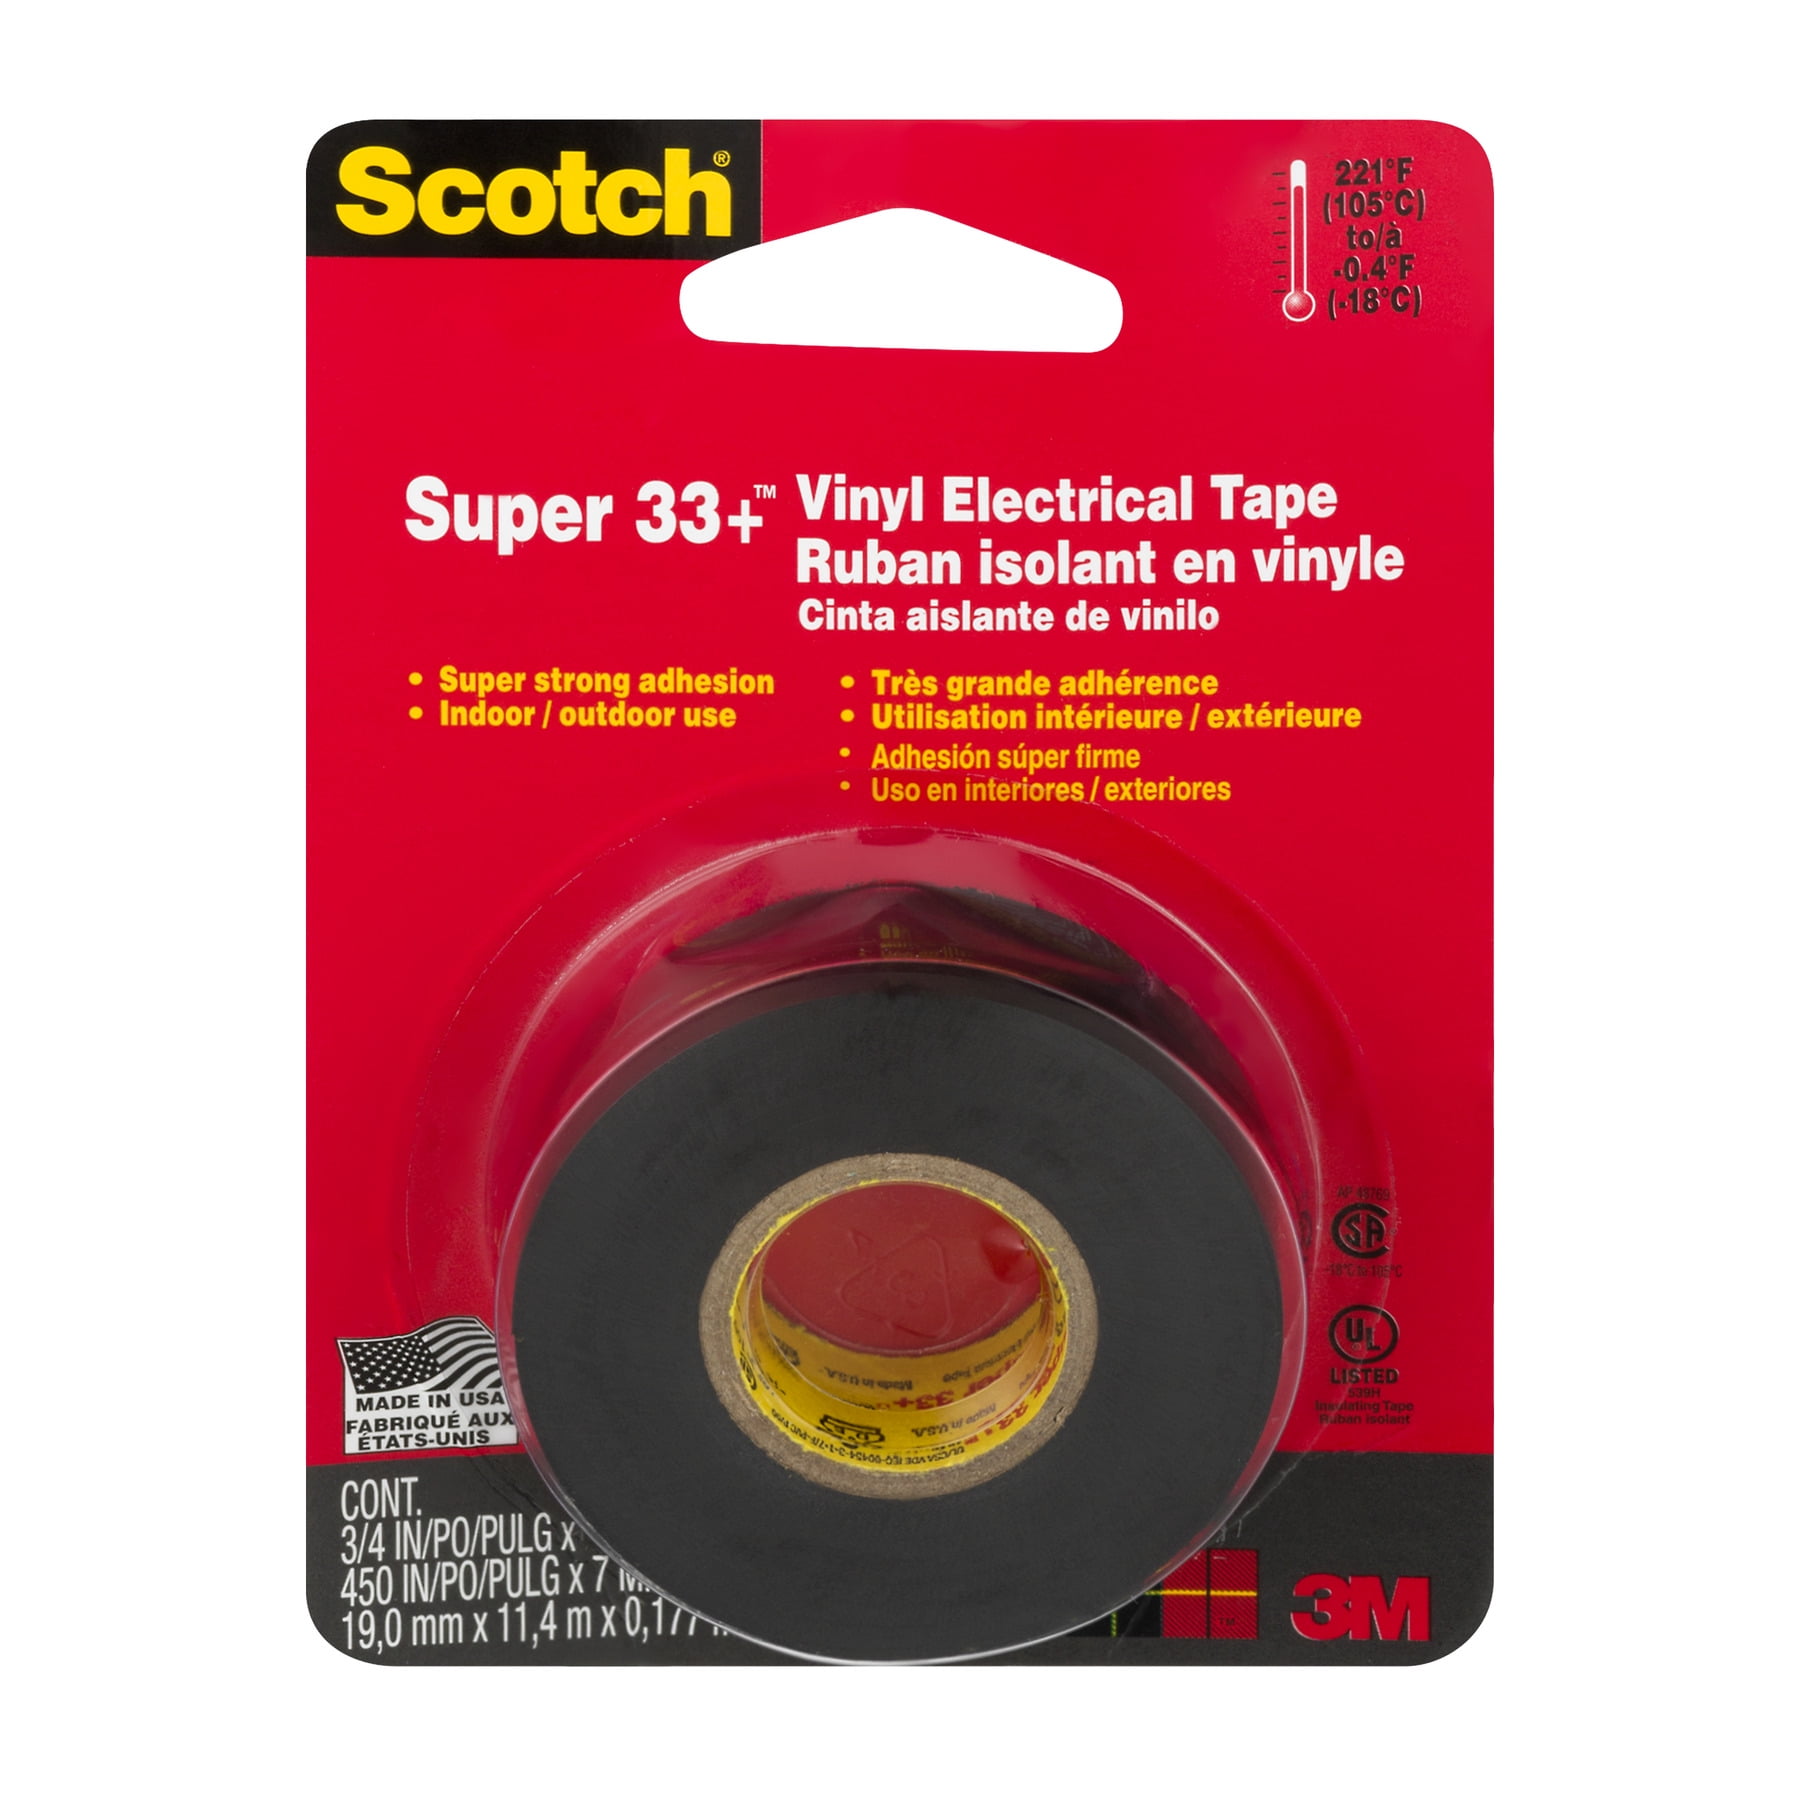 .75-In x 66-Ft Scotch Super 33 Pack of 10 Vinyl Electrical Tape